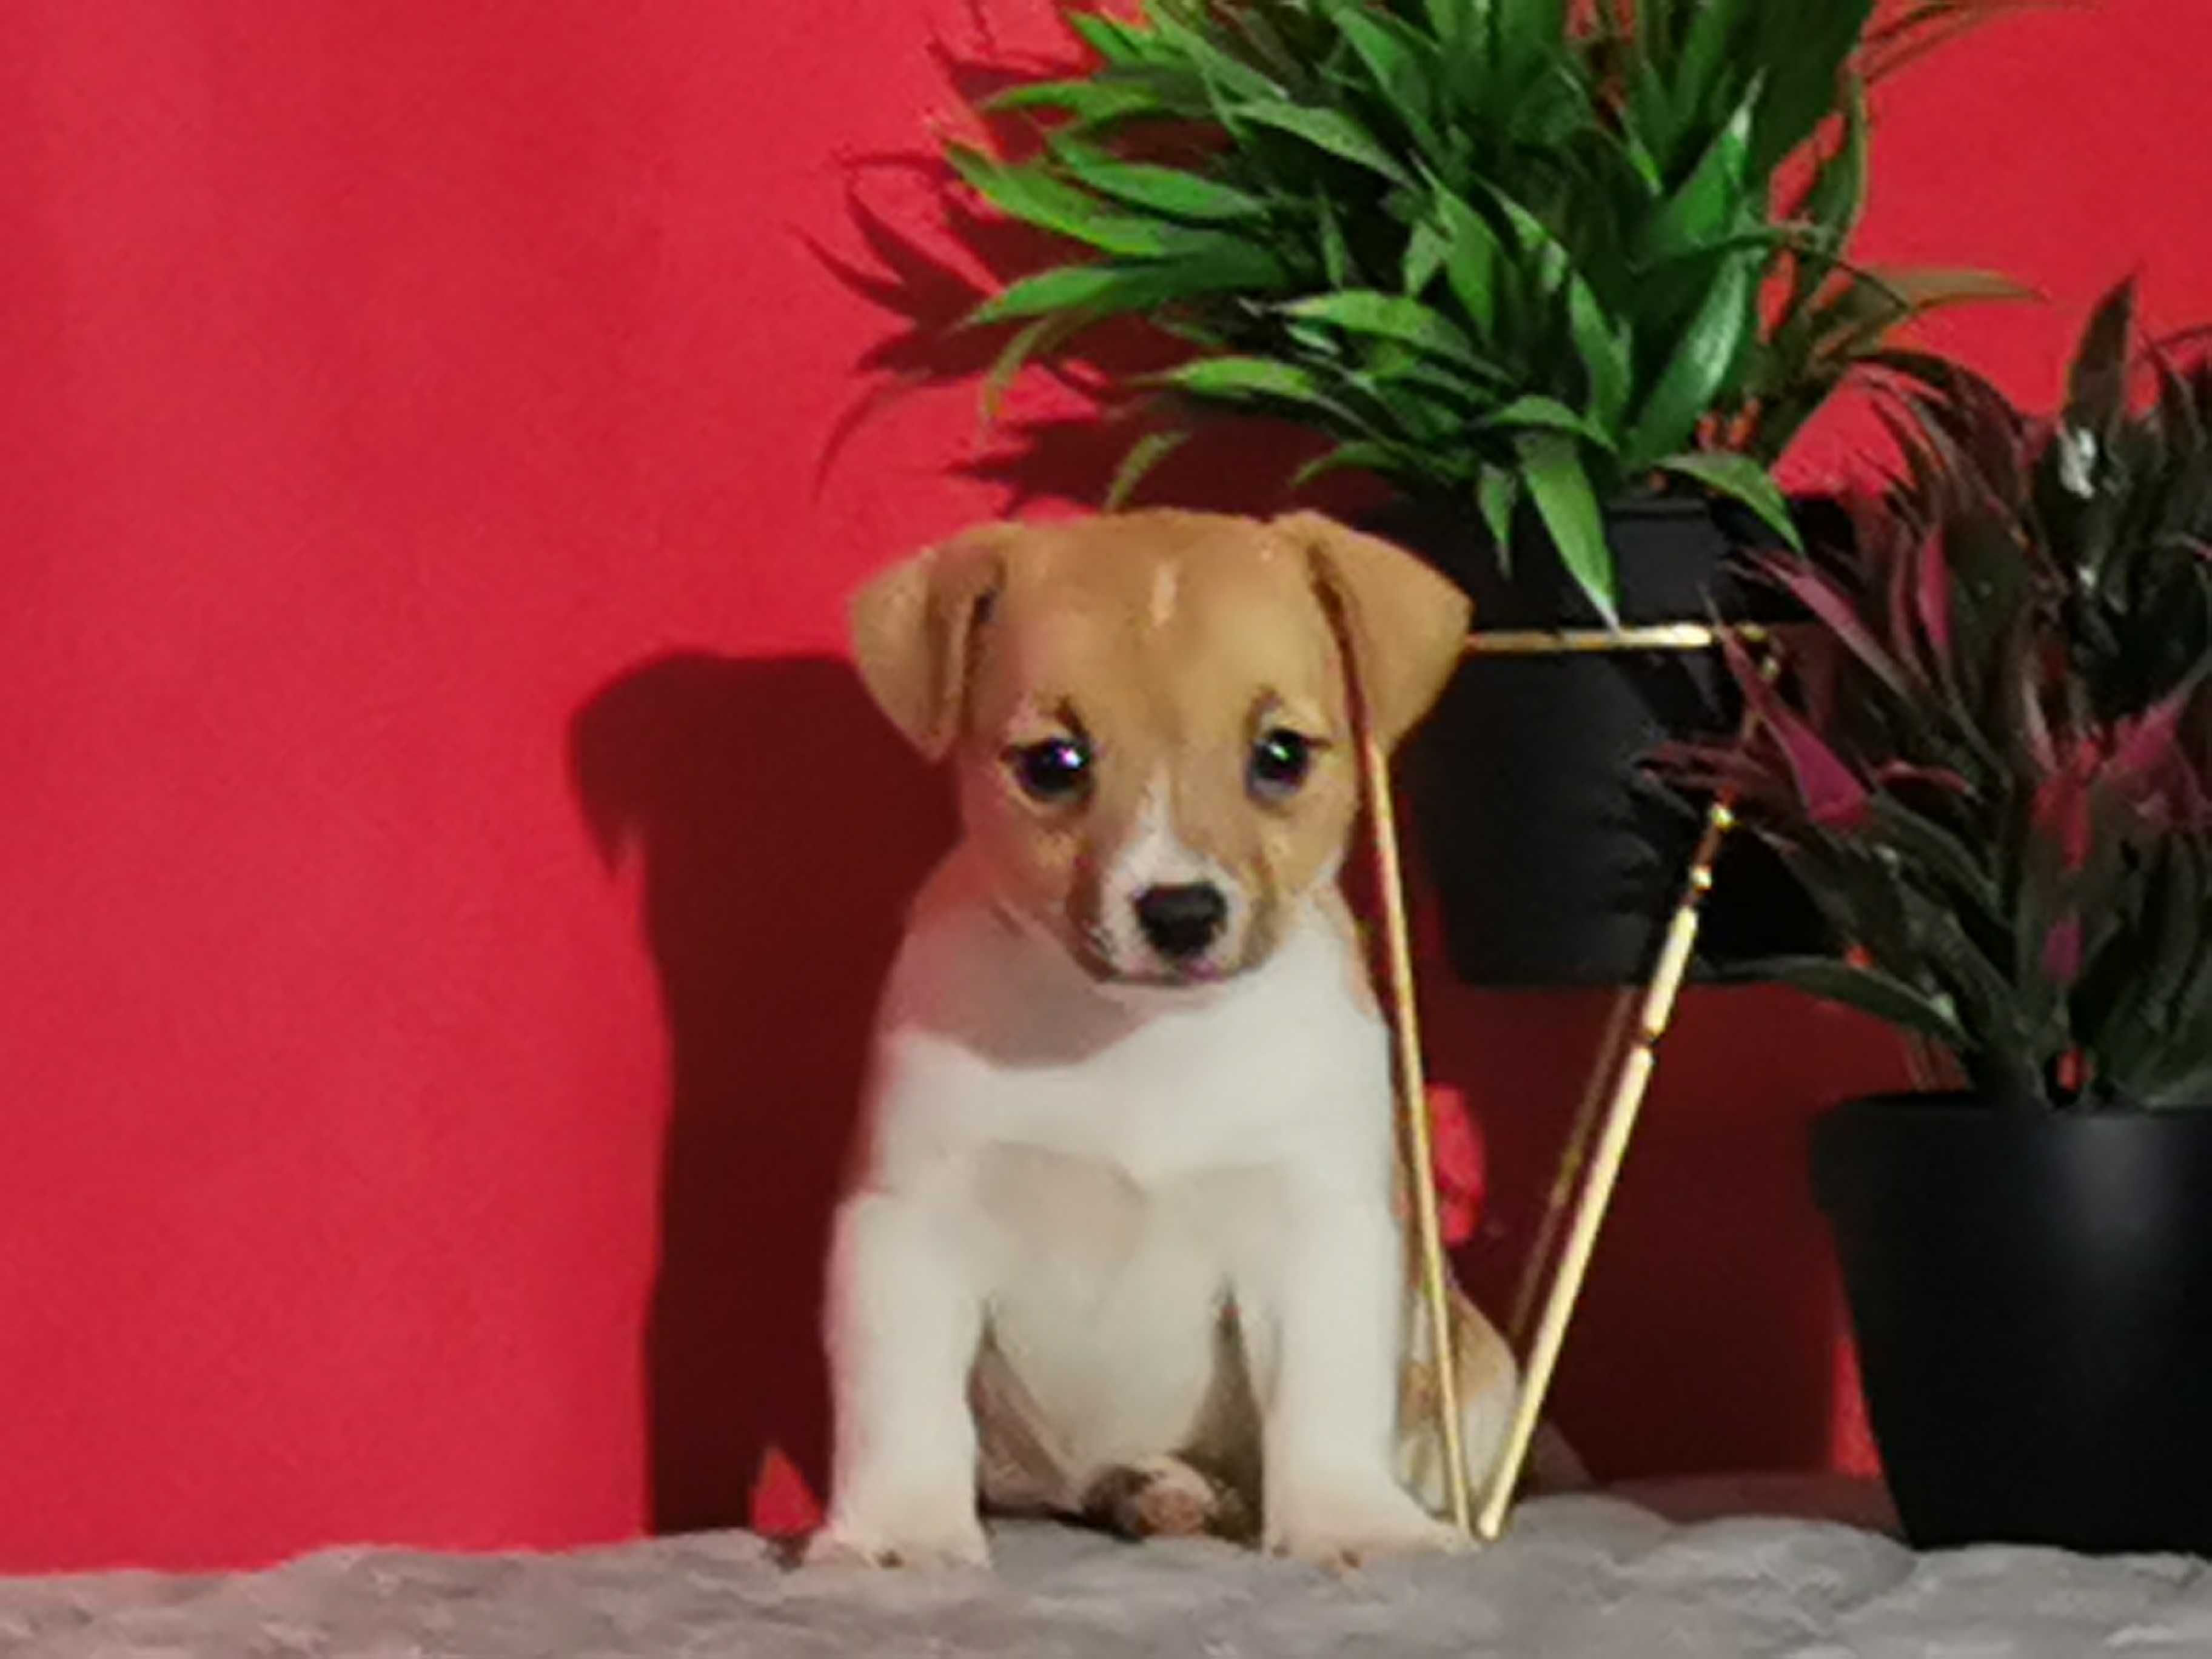 Jack Russell Terrier urocza sunia